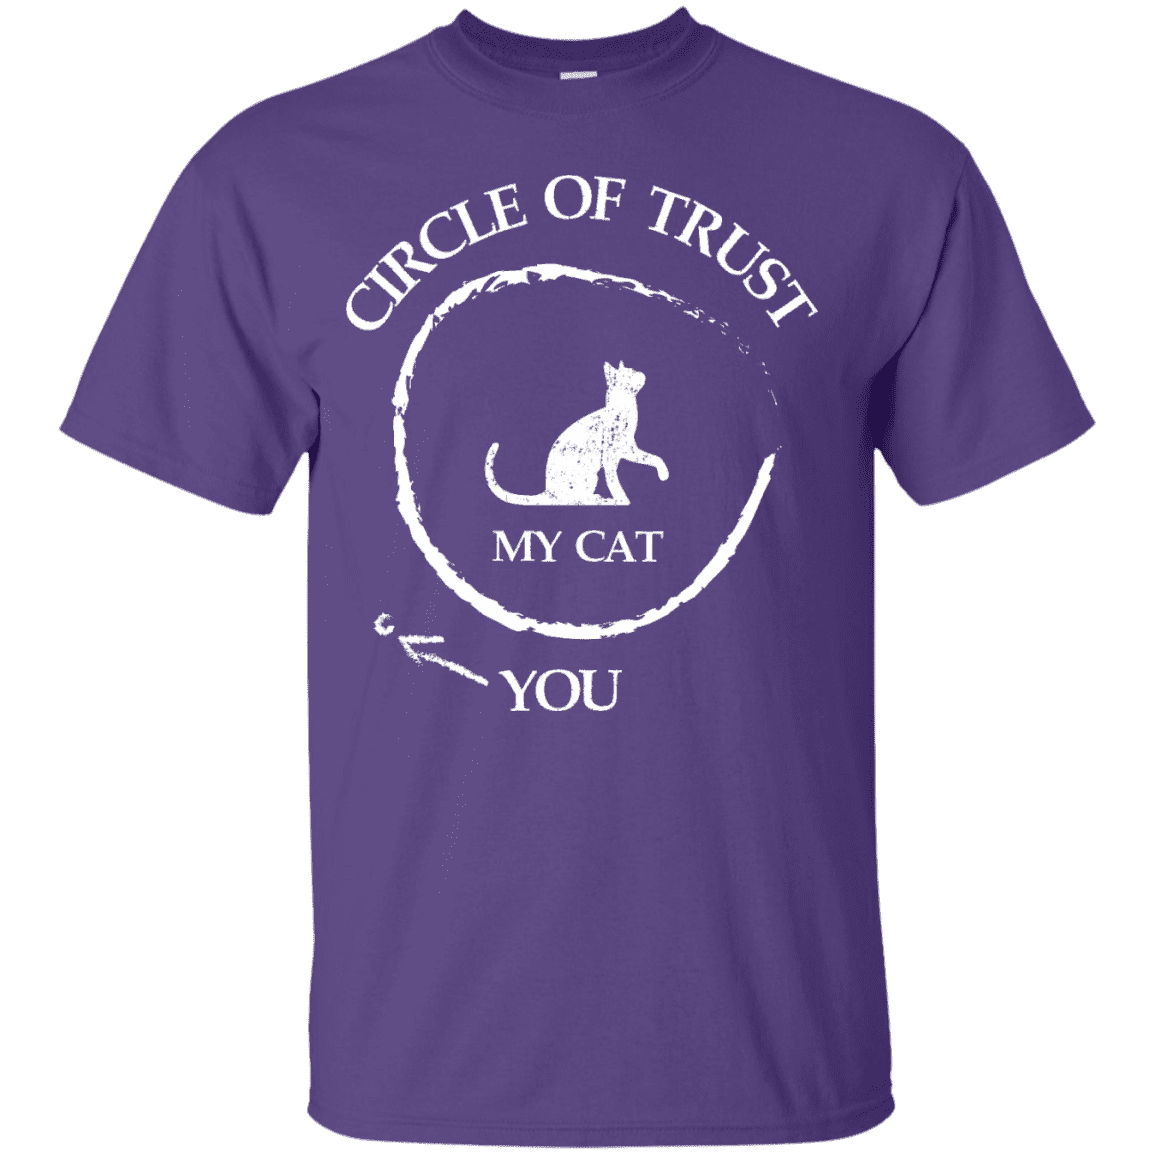 Circle Of Trust My Cat - T shirt.